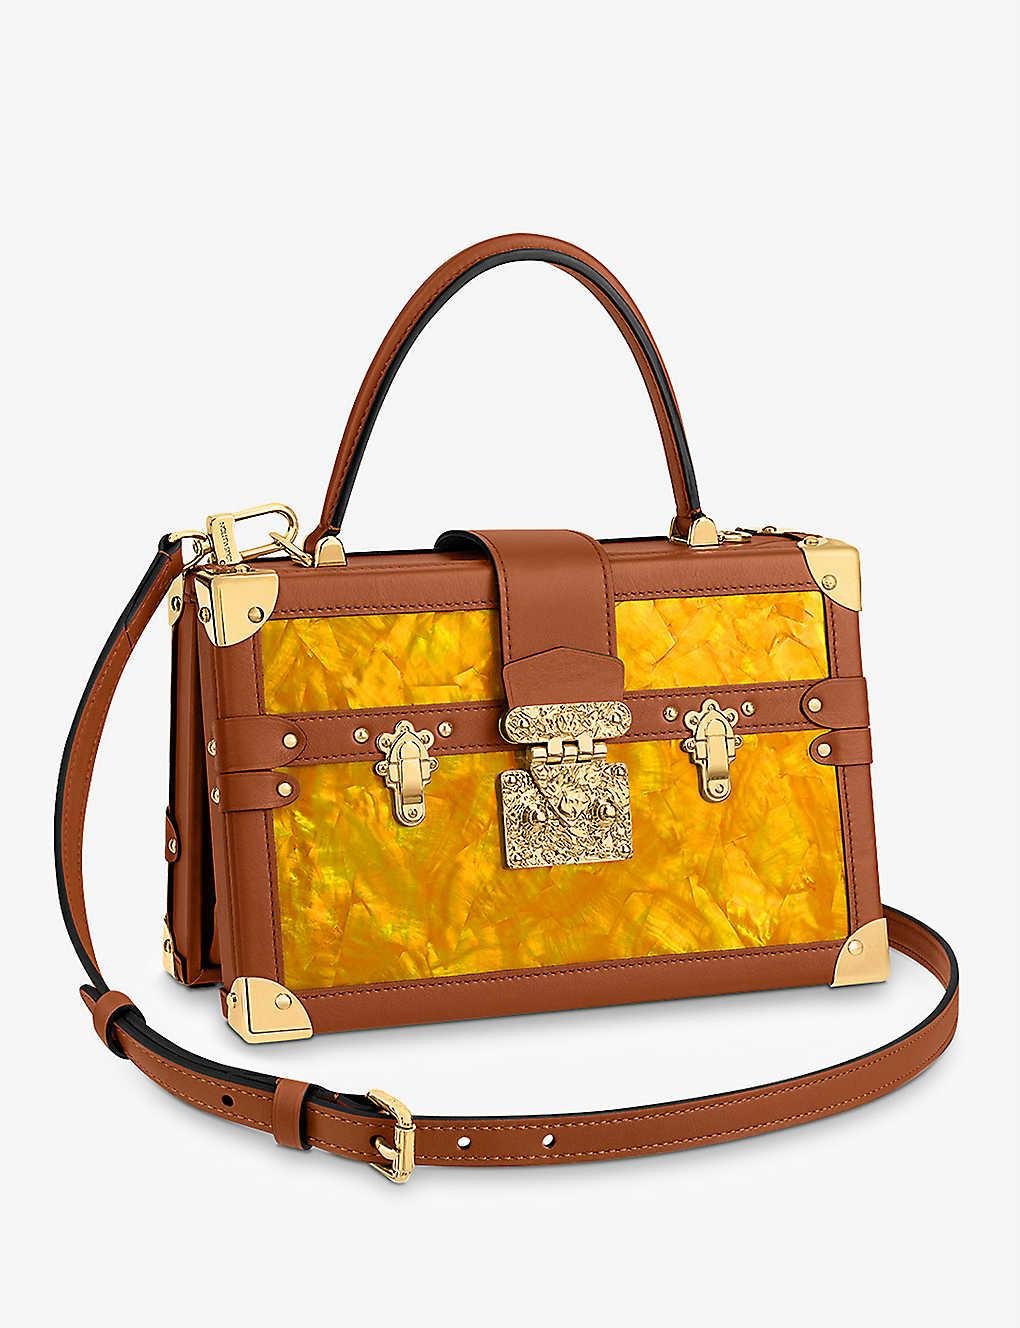 Louis Vuitton Black Petite Malle Handbag Bag